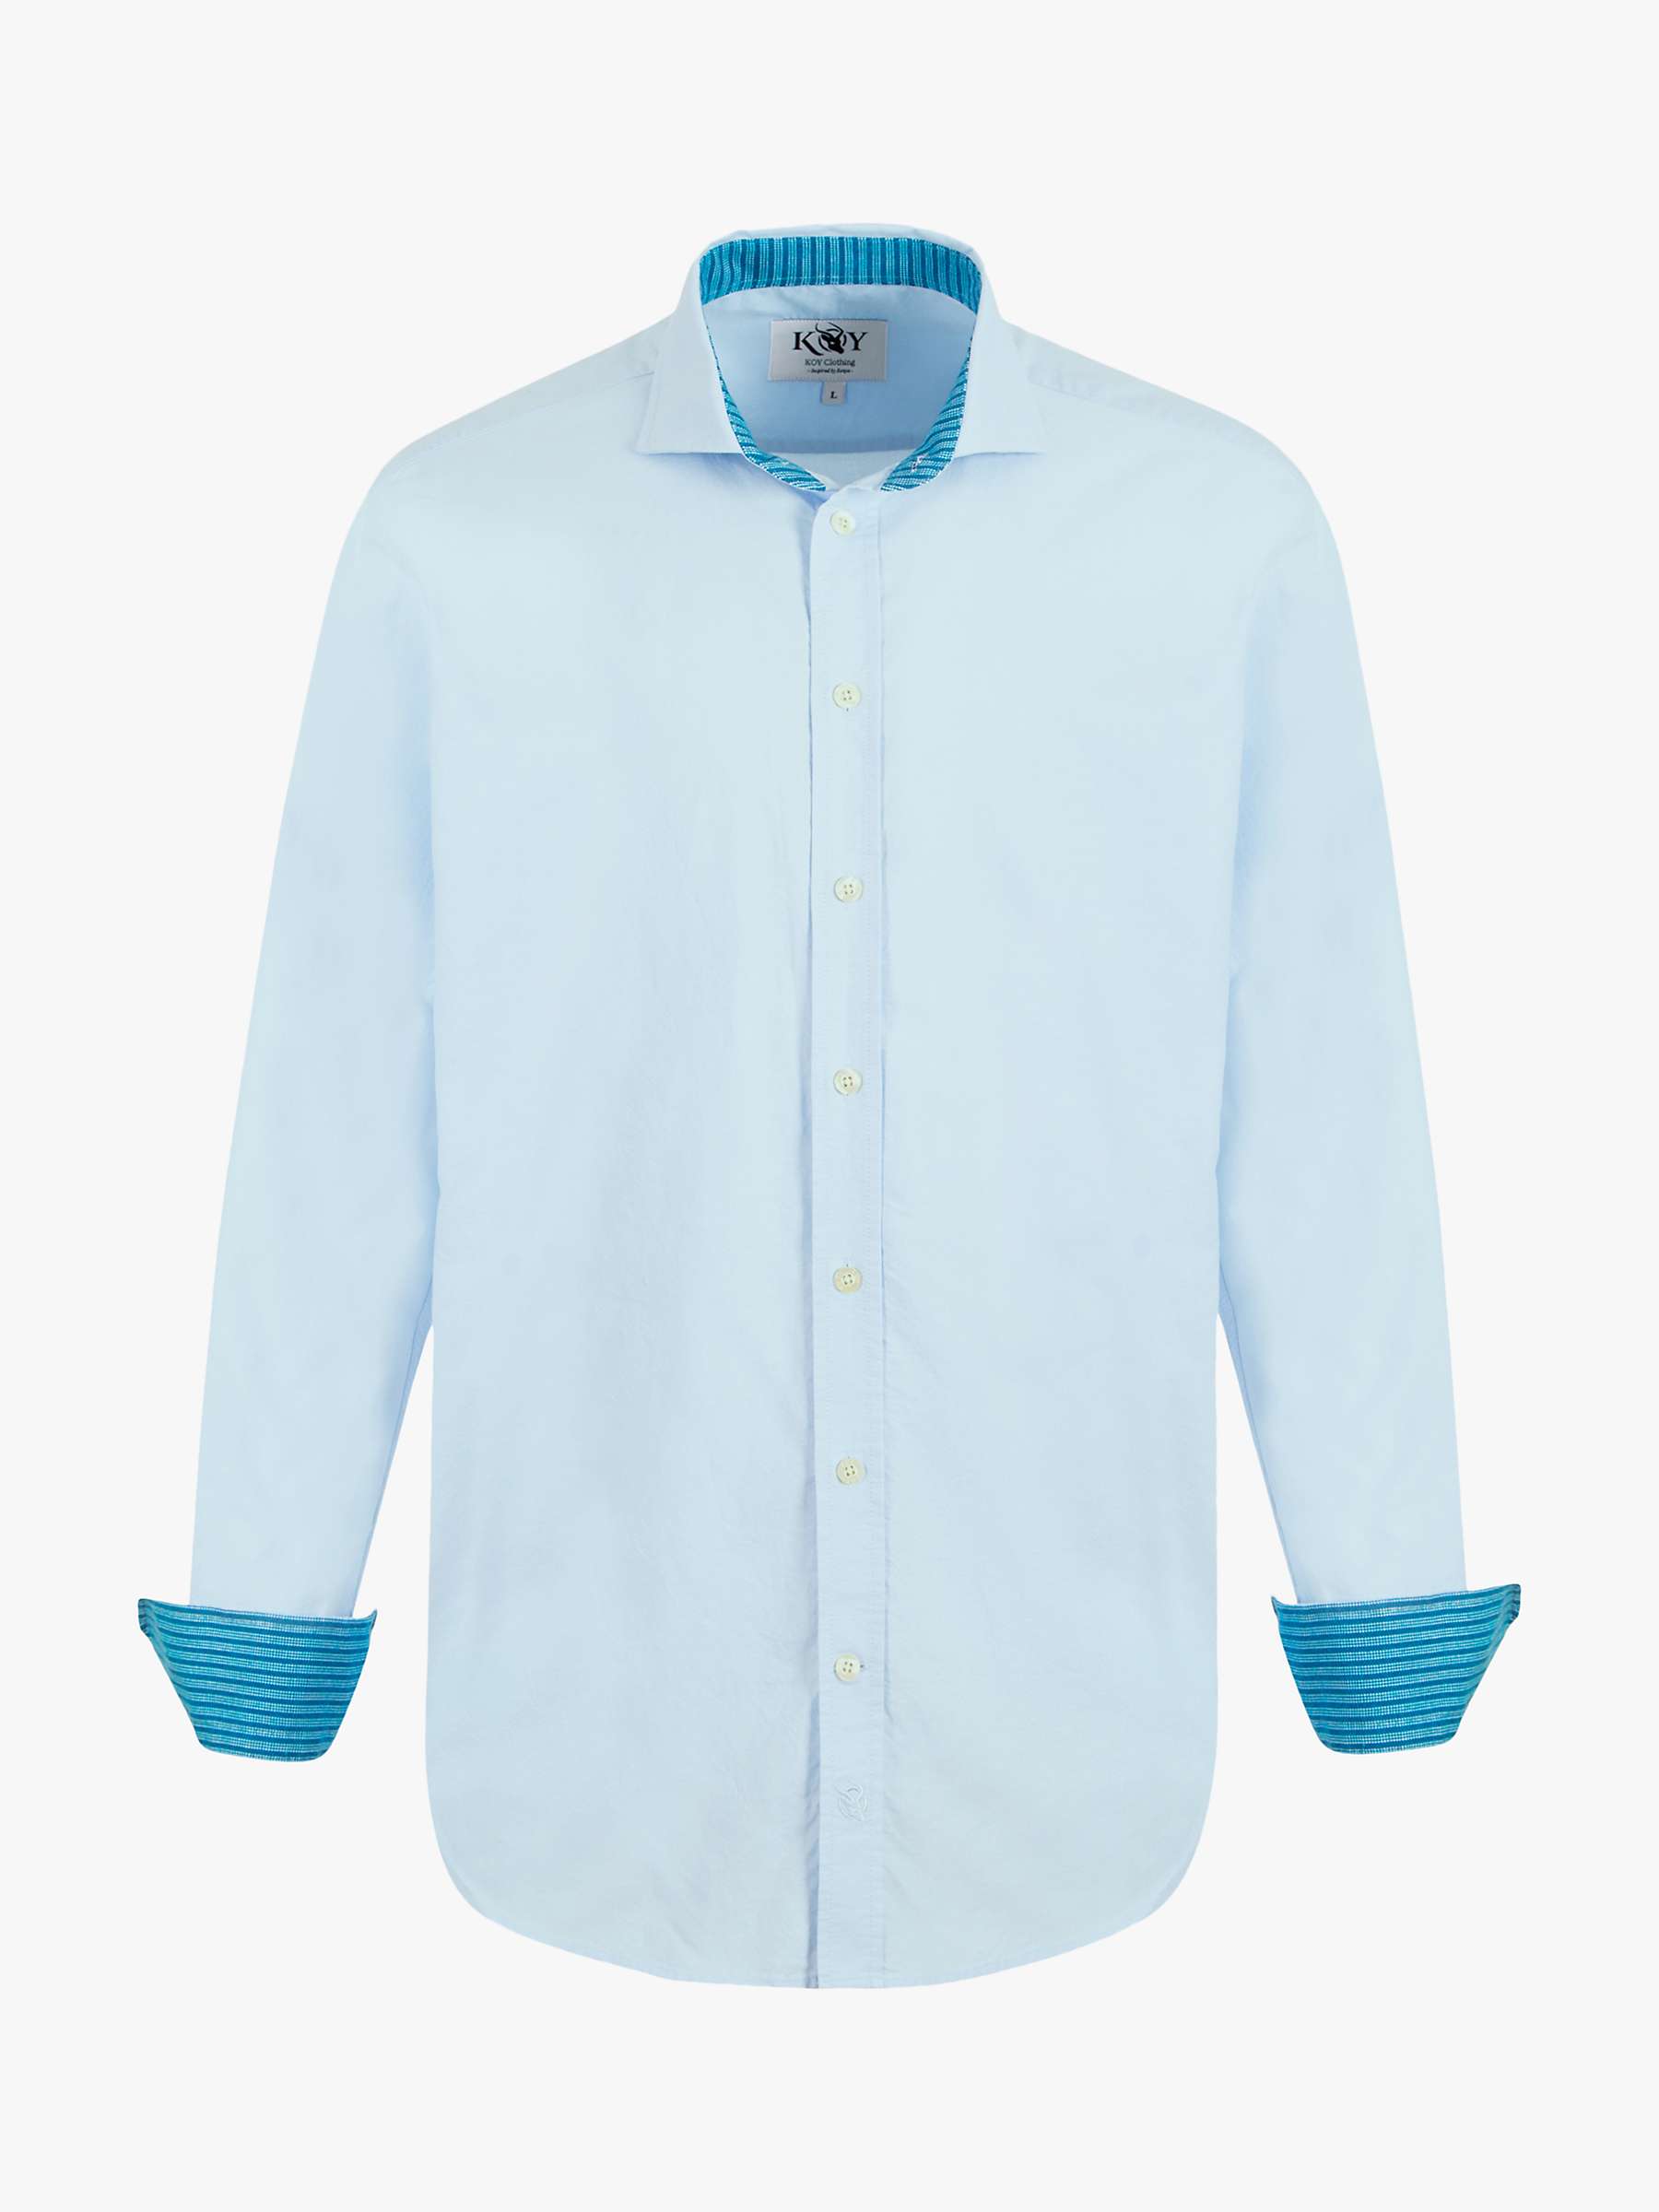 Buy KOY Oxford Cotton Shirt, Blue Light Online at johnlewis.com